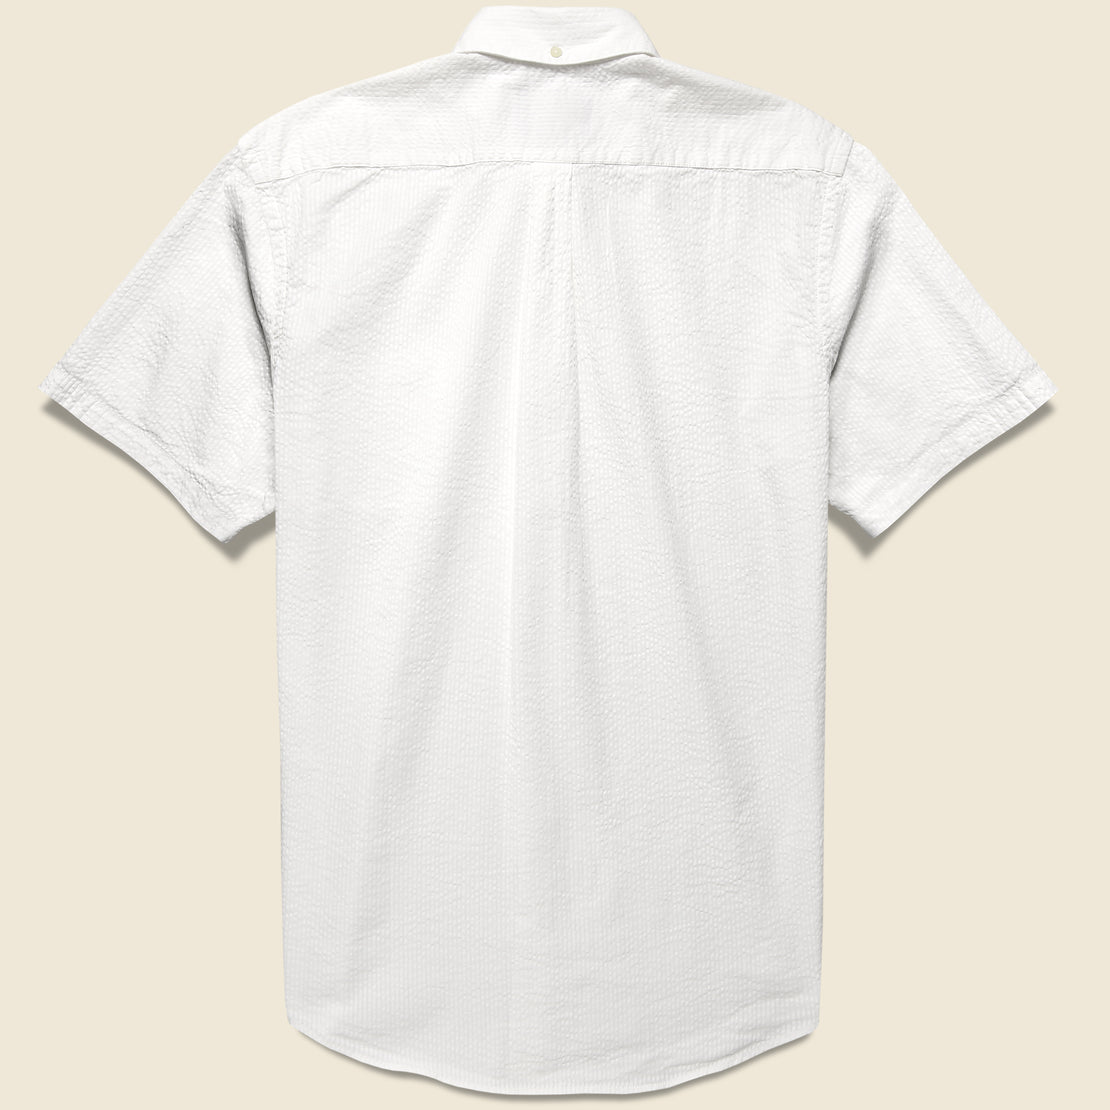 Atlantico Seersucker Shirt - White - Portuguese Flannel - STAG Provisions - Tops - S/S Woven - Seersucker